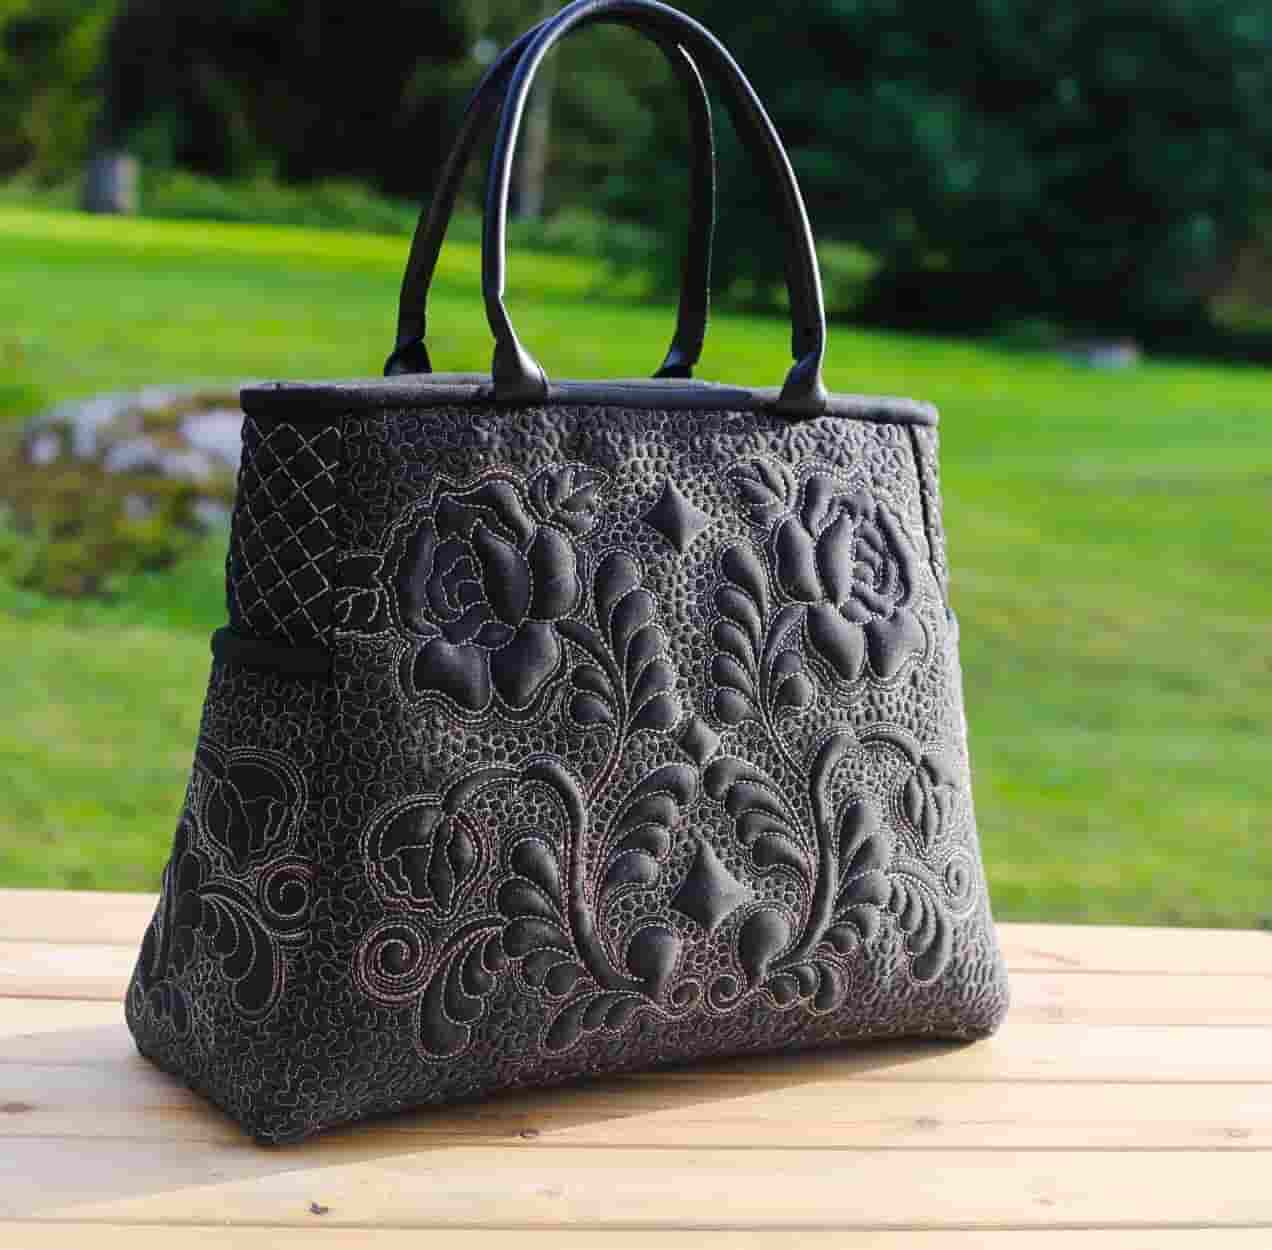 Leather handbag straps